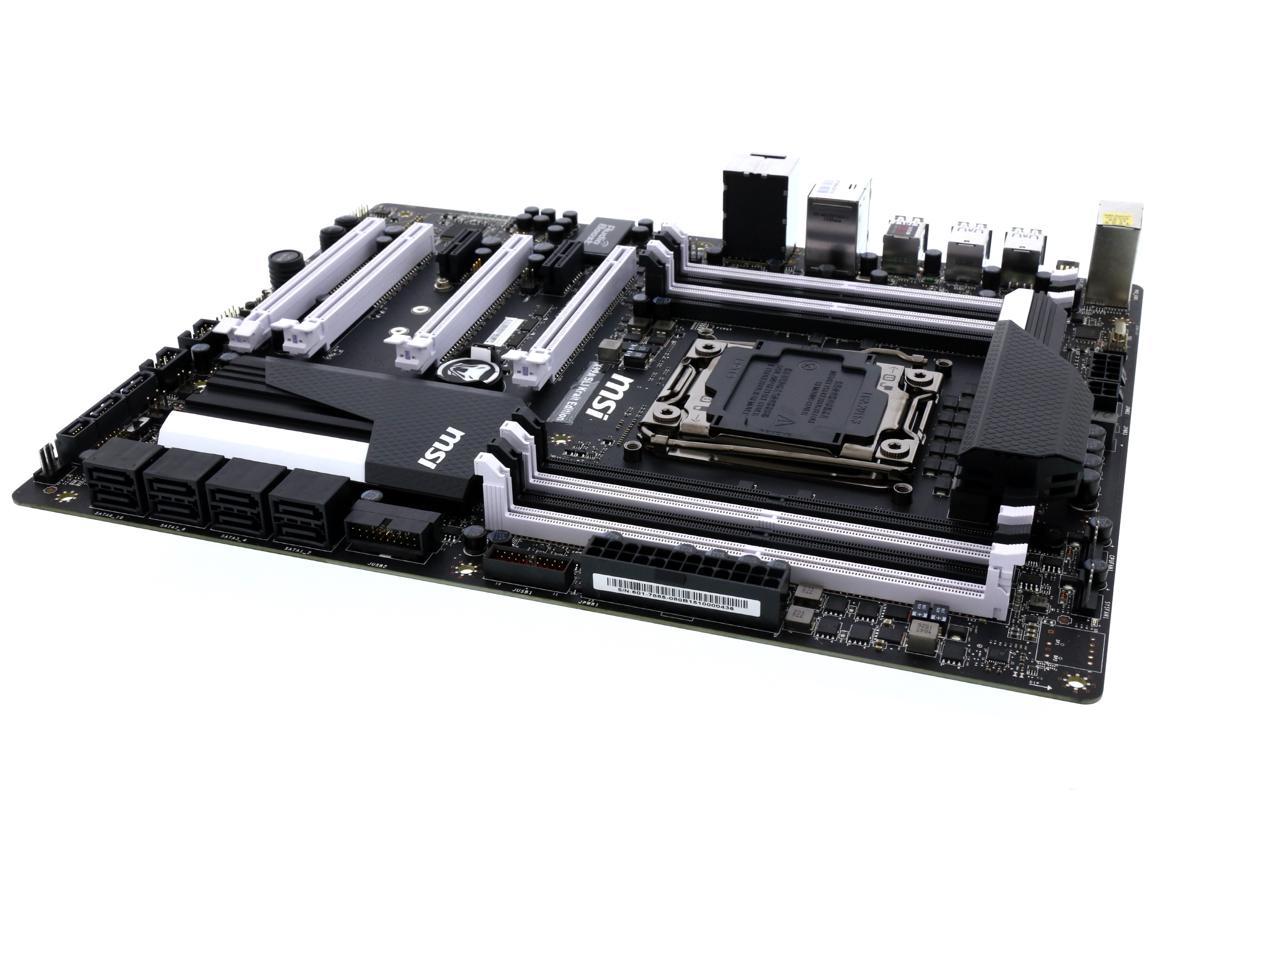 Used - Very Good: MSI X99A SLI KRAIT EDITION LGA 2011-v3 ATX Intel